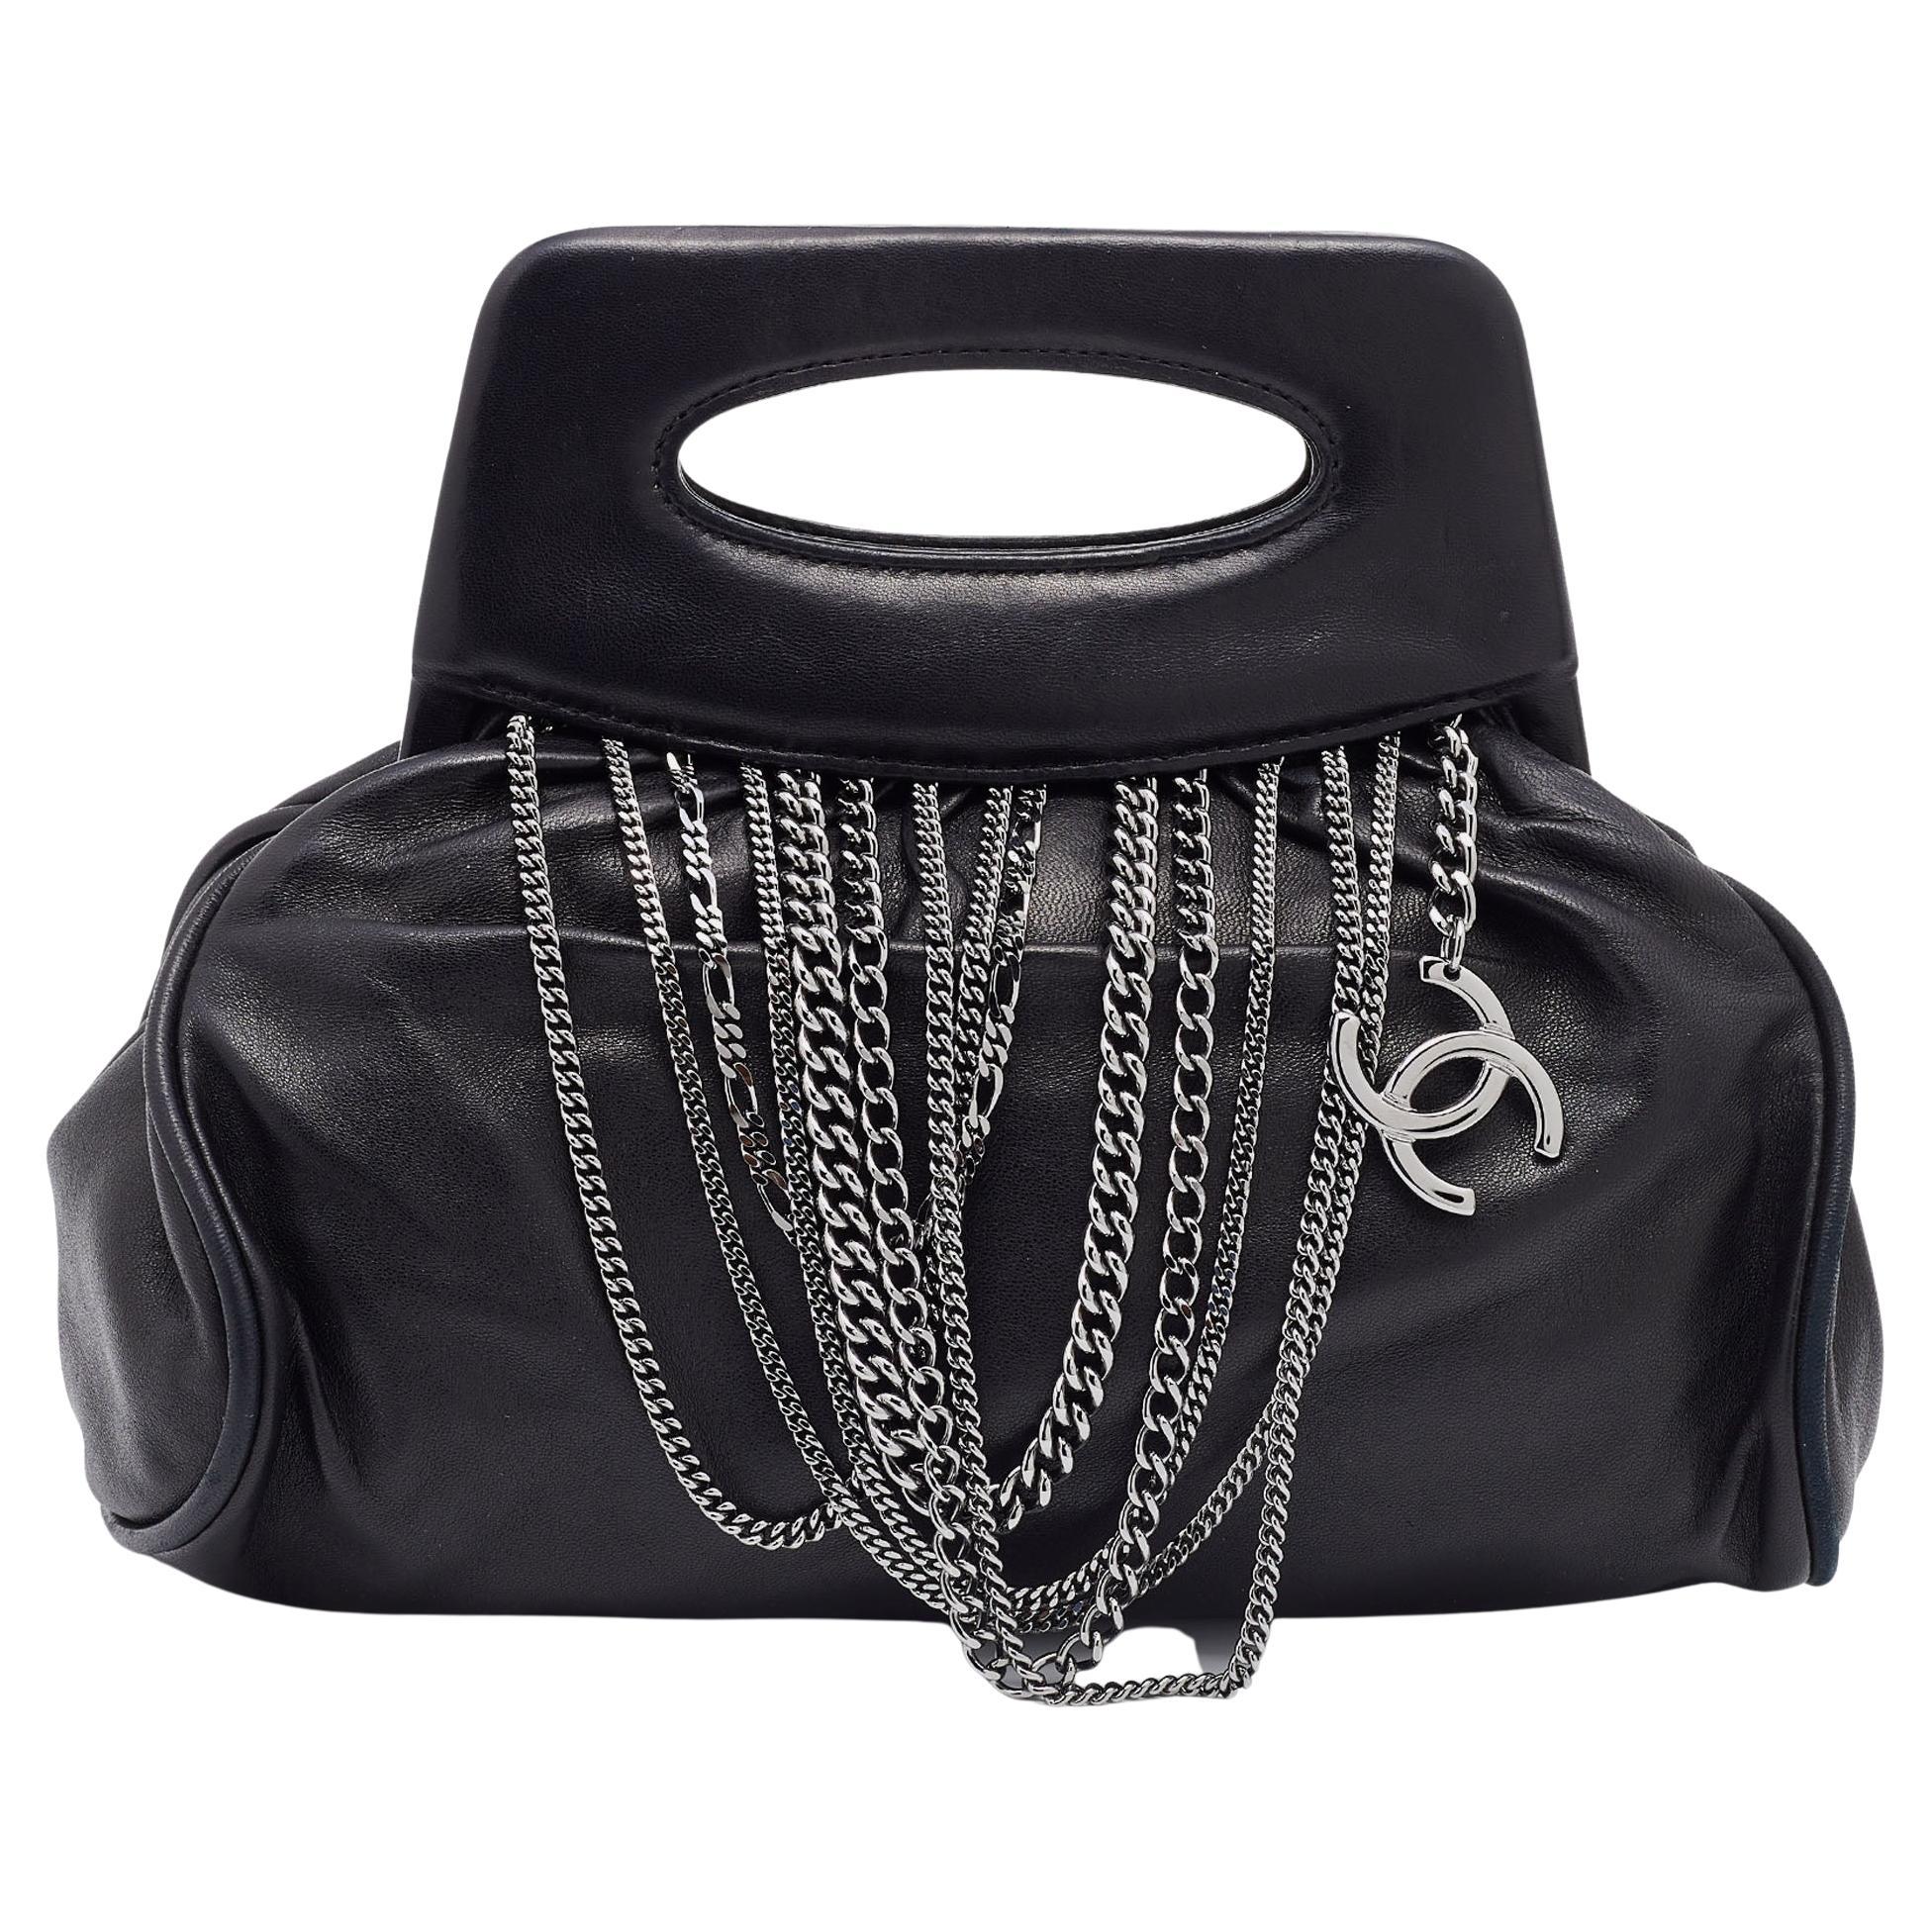 Chanel Black Leather Charm Chain Clutch